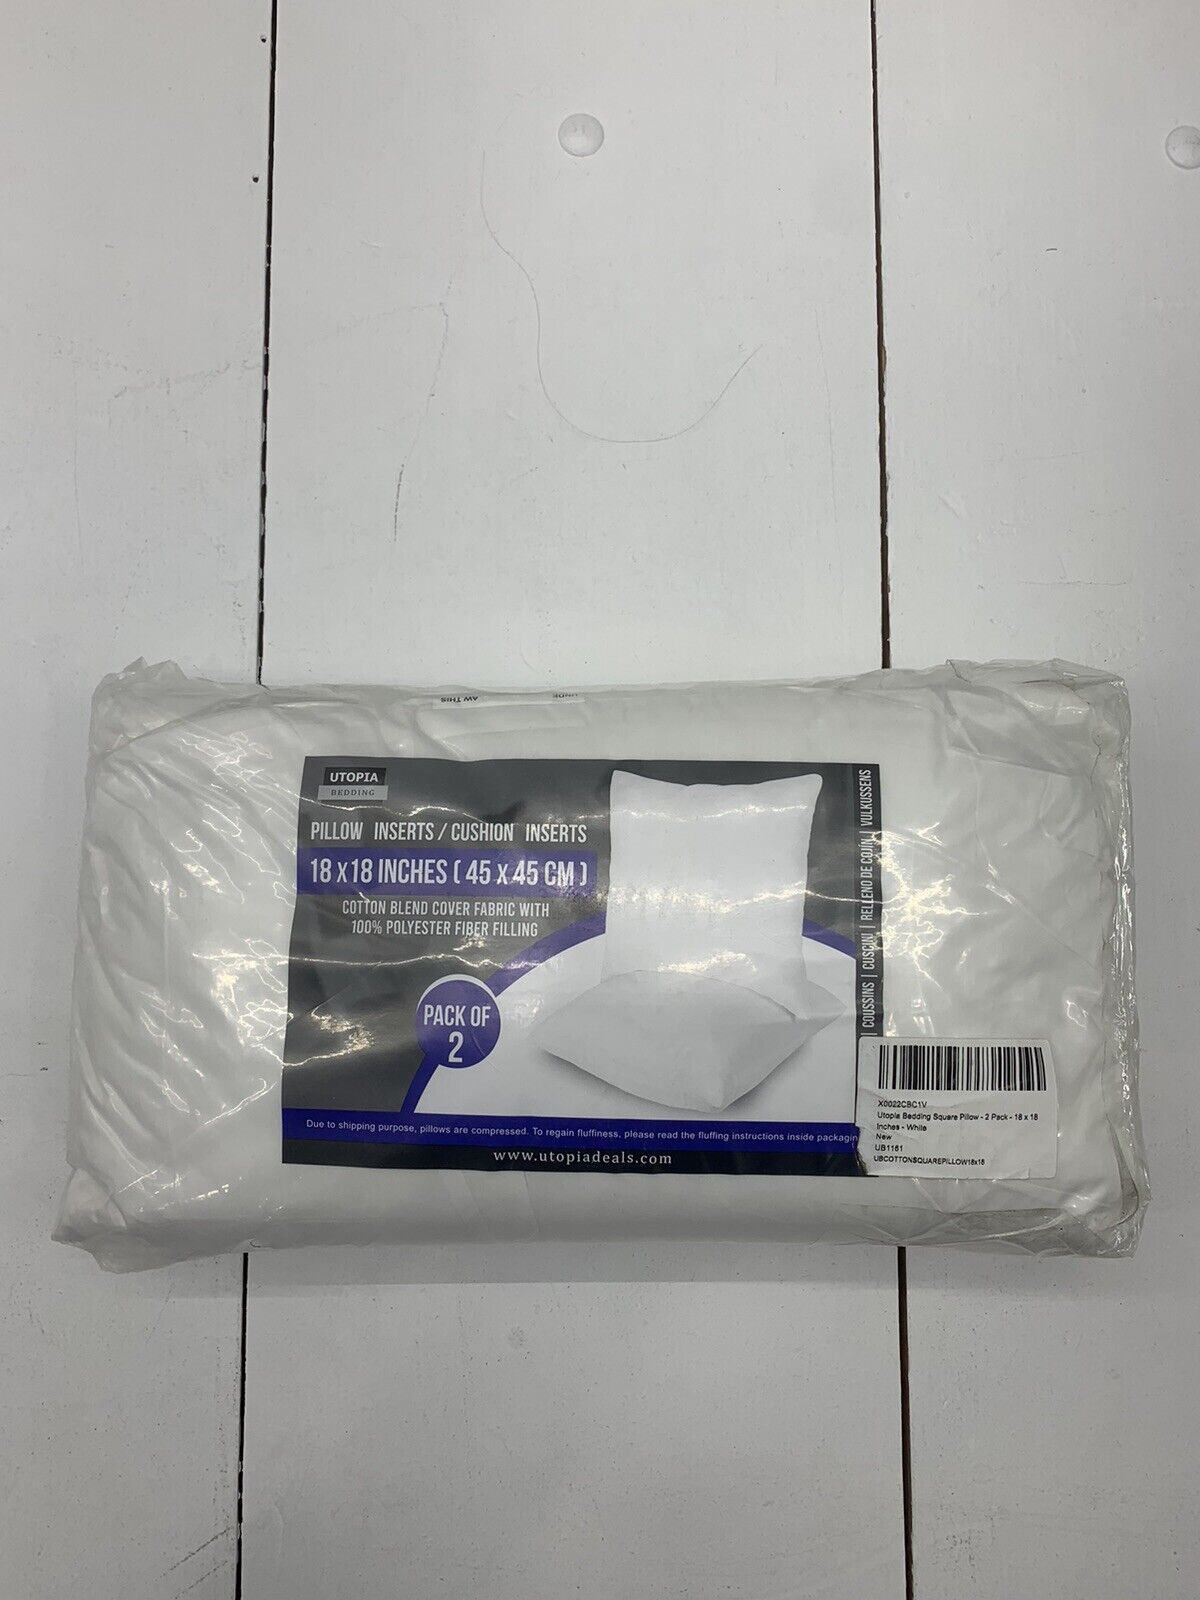 Utopia Bedding 18 x 18 inch Decorative Pillow Insert, White - 2 Pack -  beyond exchange